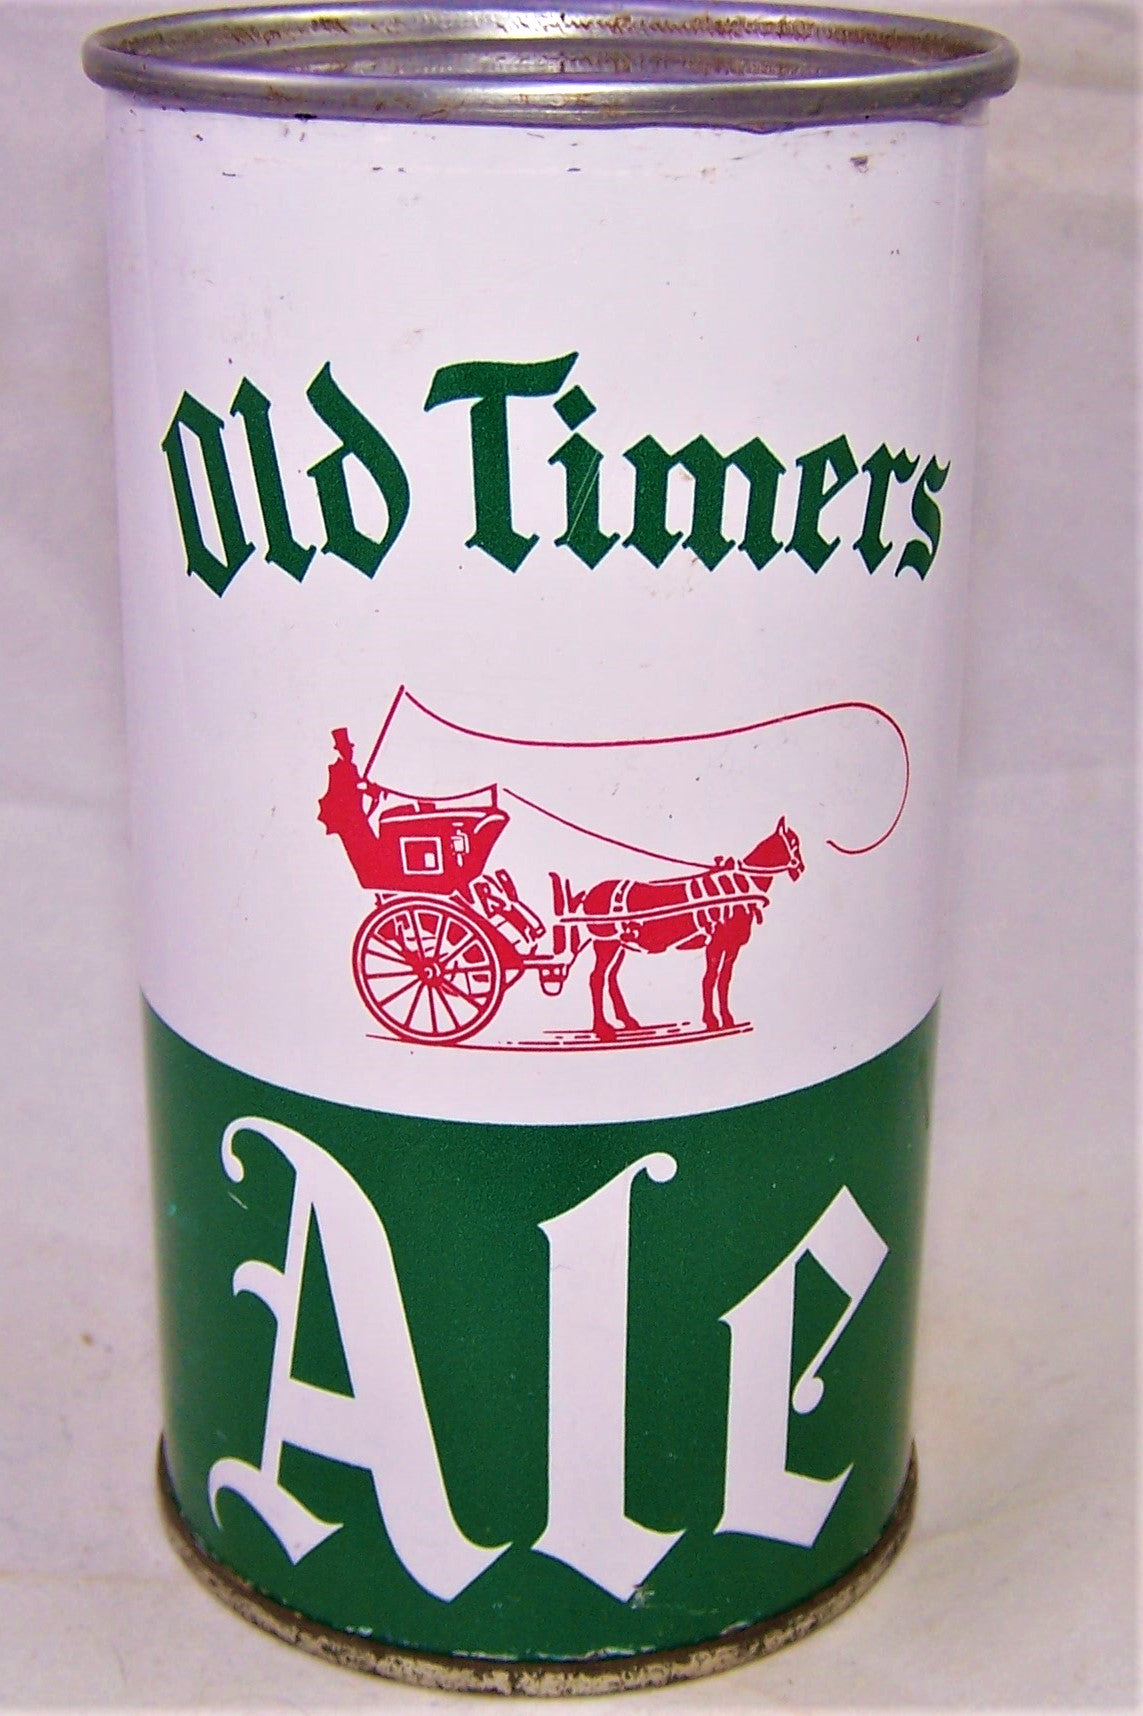 Old Timers Ale (Buffalo) USBC 108-27, Grade 1